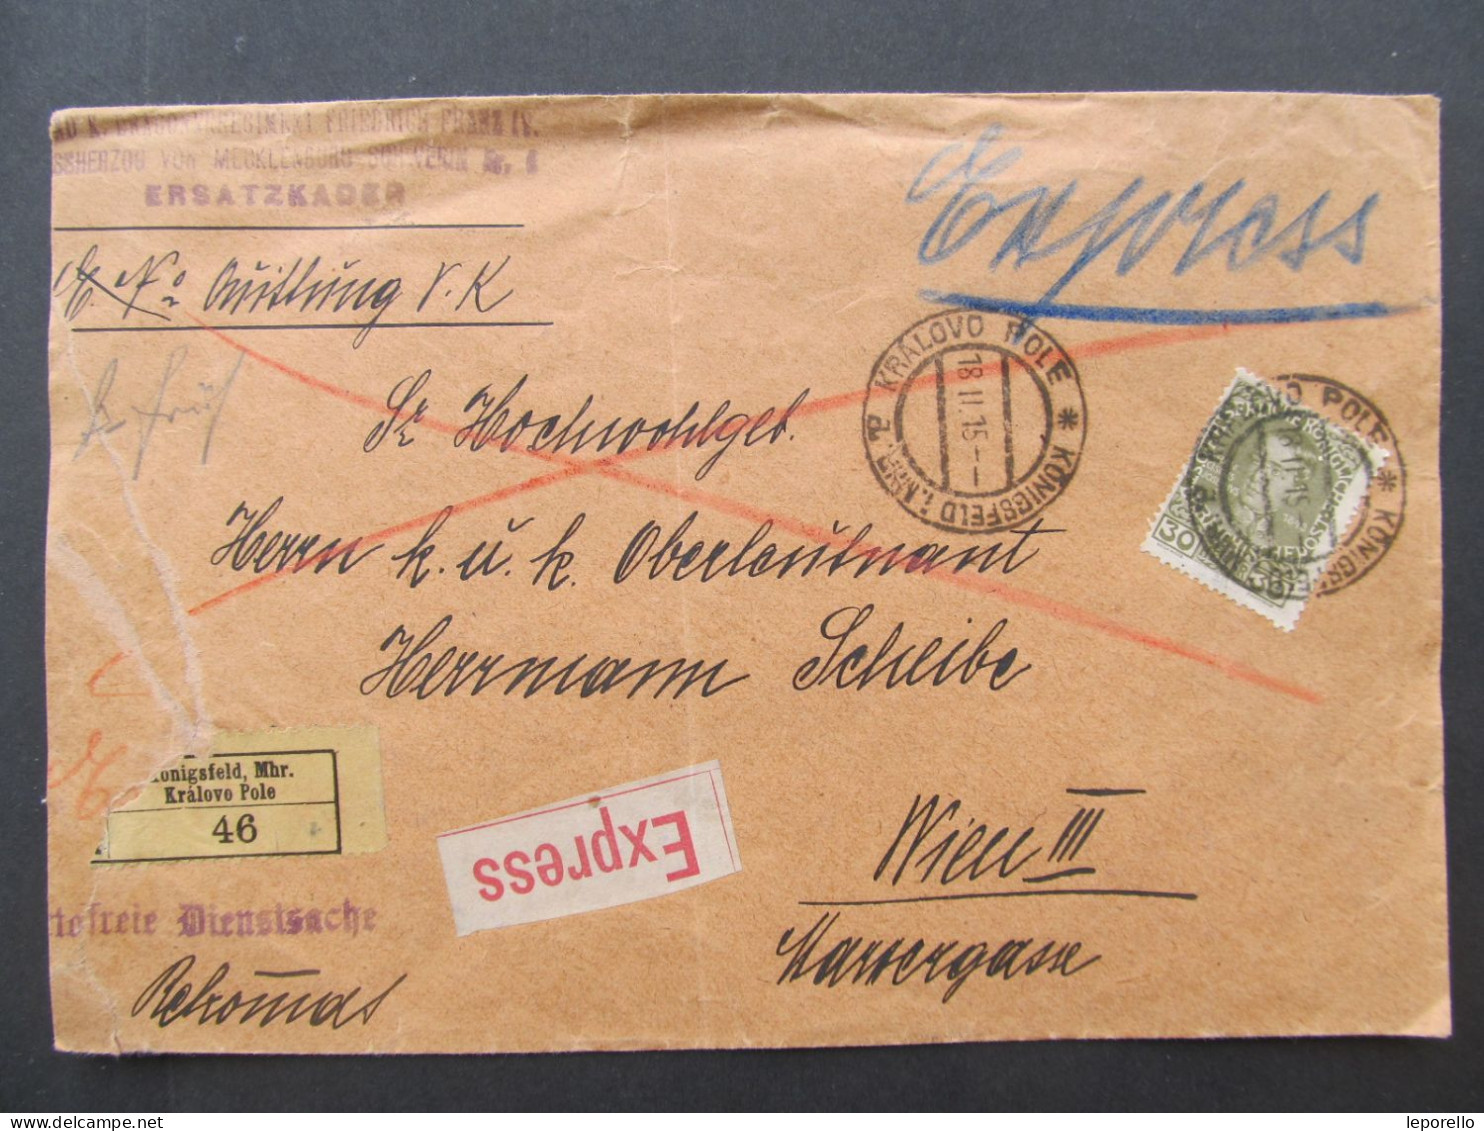 BRIEF Brno Královo Pole - Wien R, Ex 1915 Portofreie Dienstsache  / P9940 - Lettres & Documents